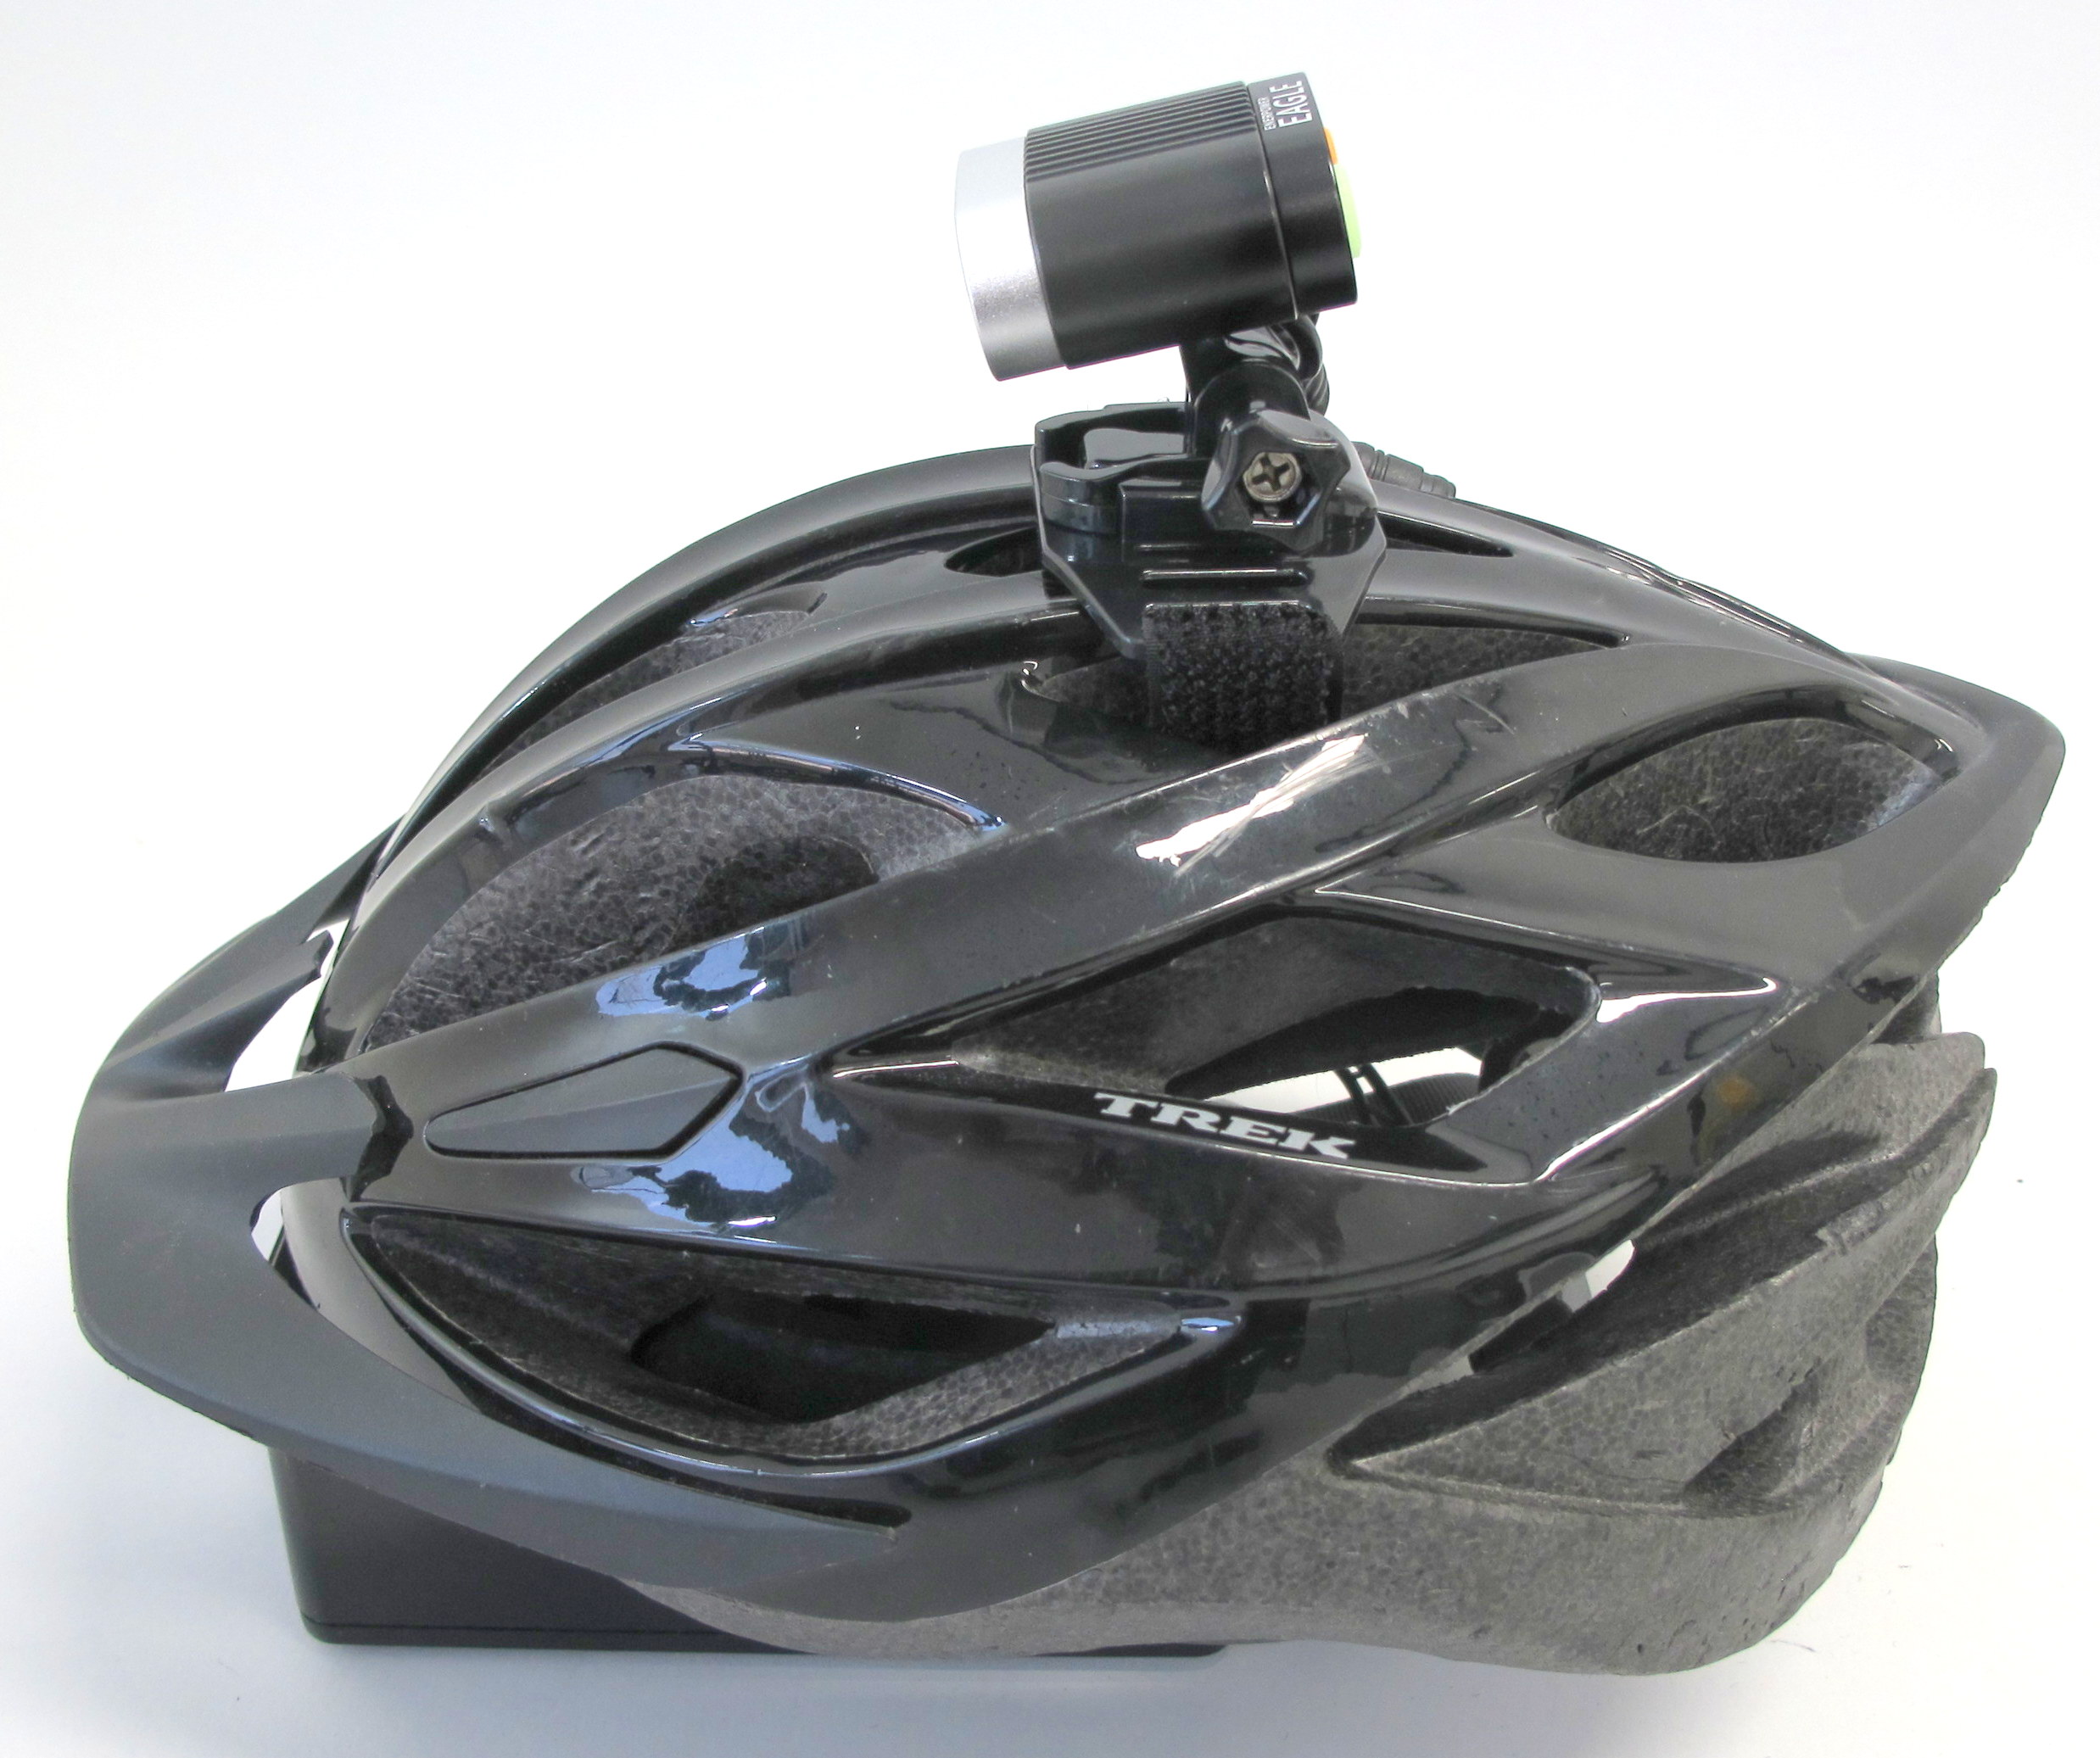 Enerpower EAGLE  Two CREE XM-L2 U2 helmet lamp 2200 lumens GoPro Version